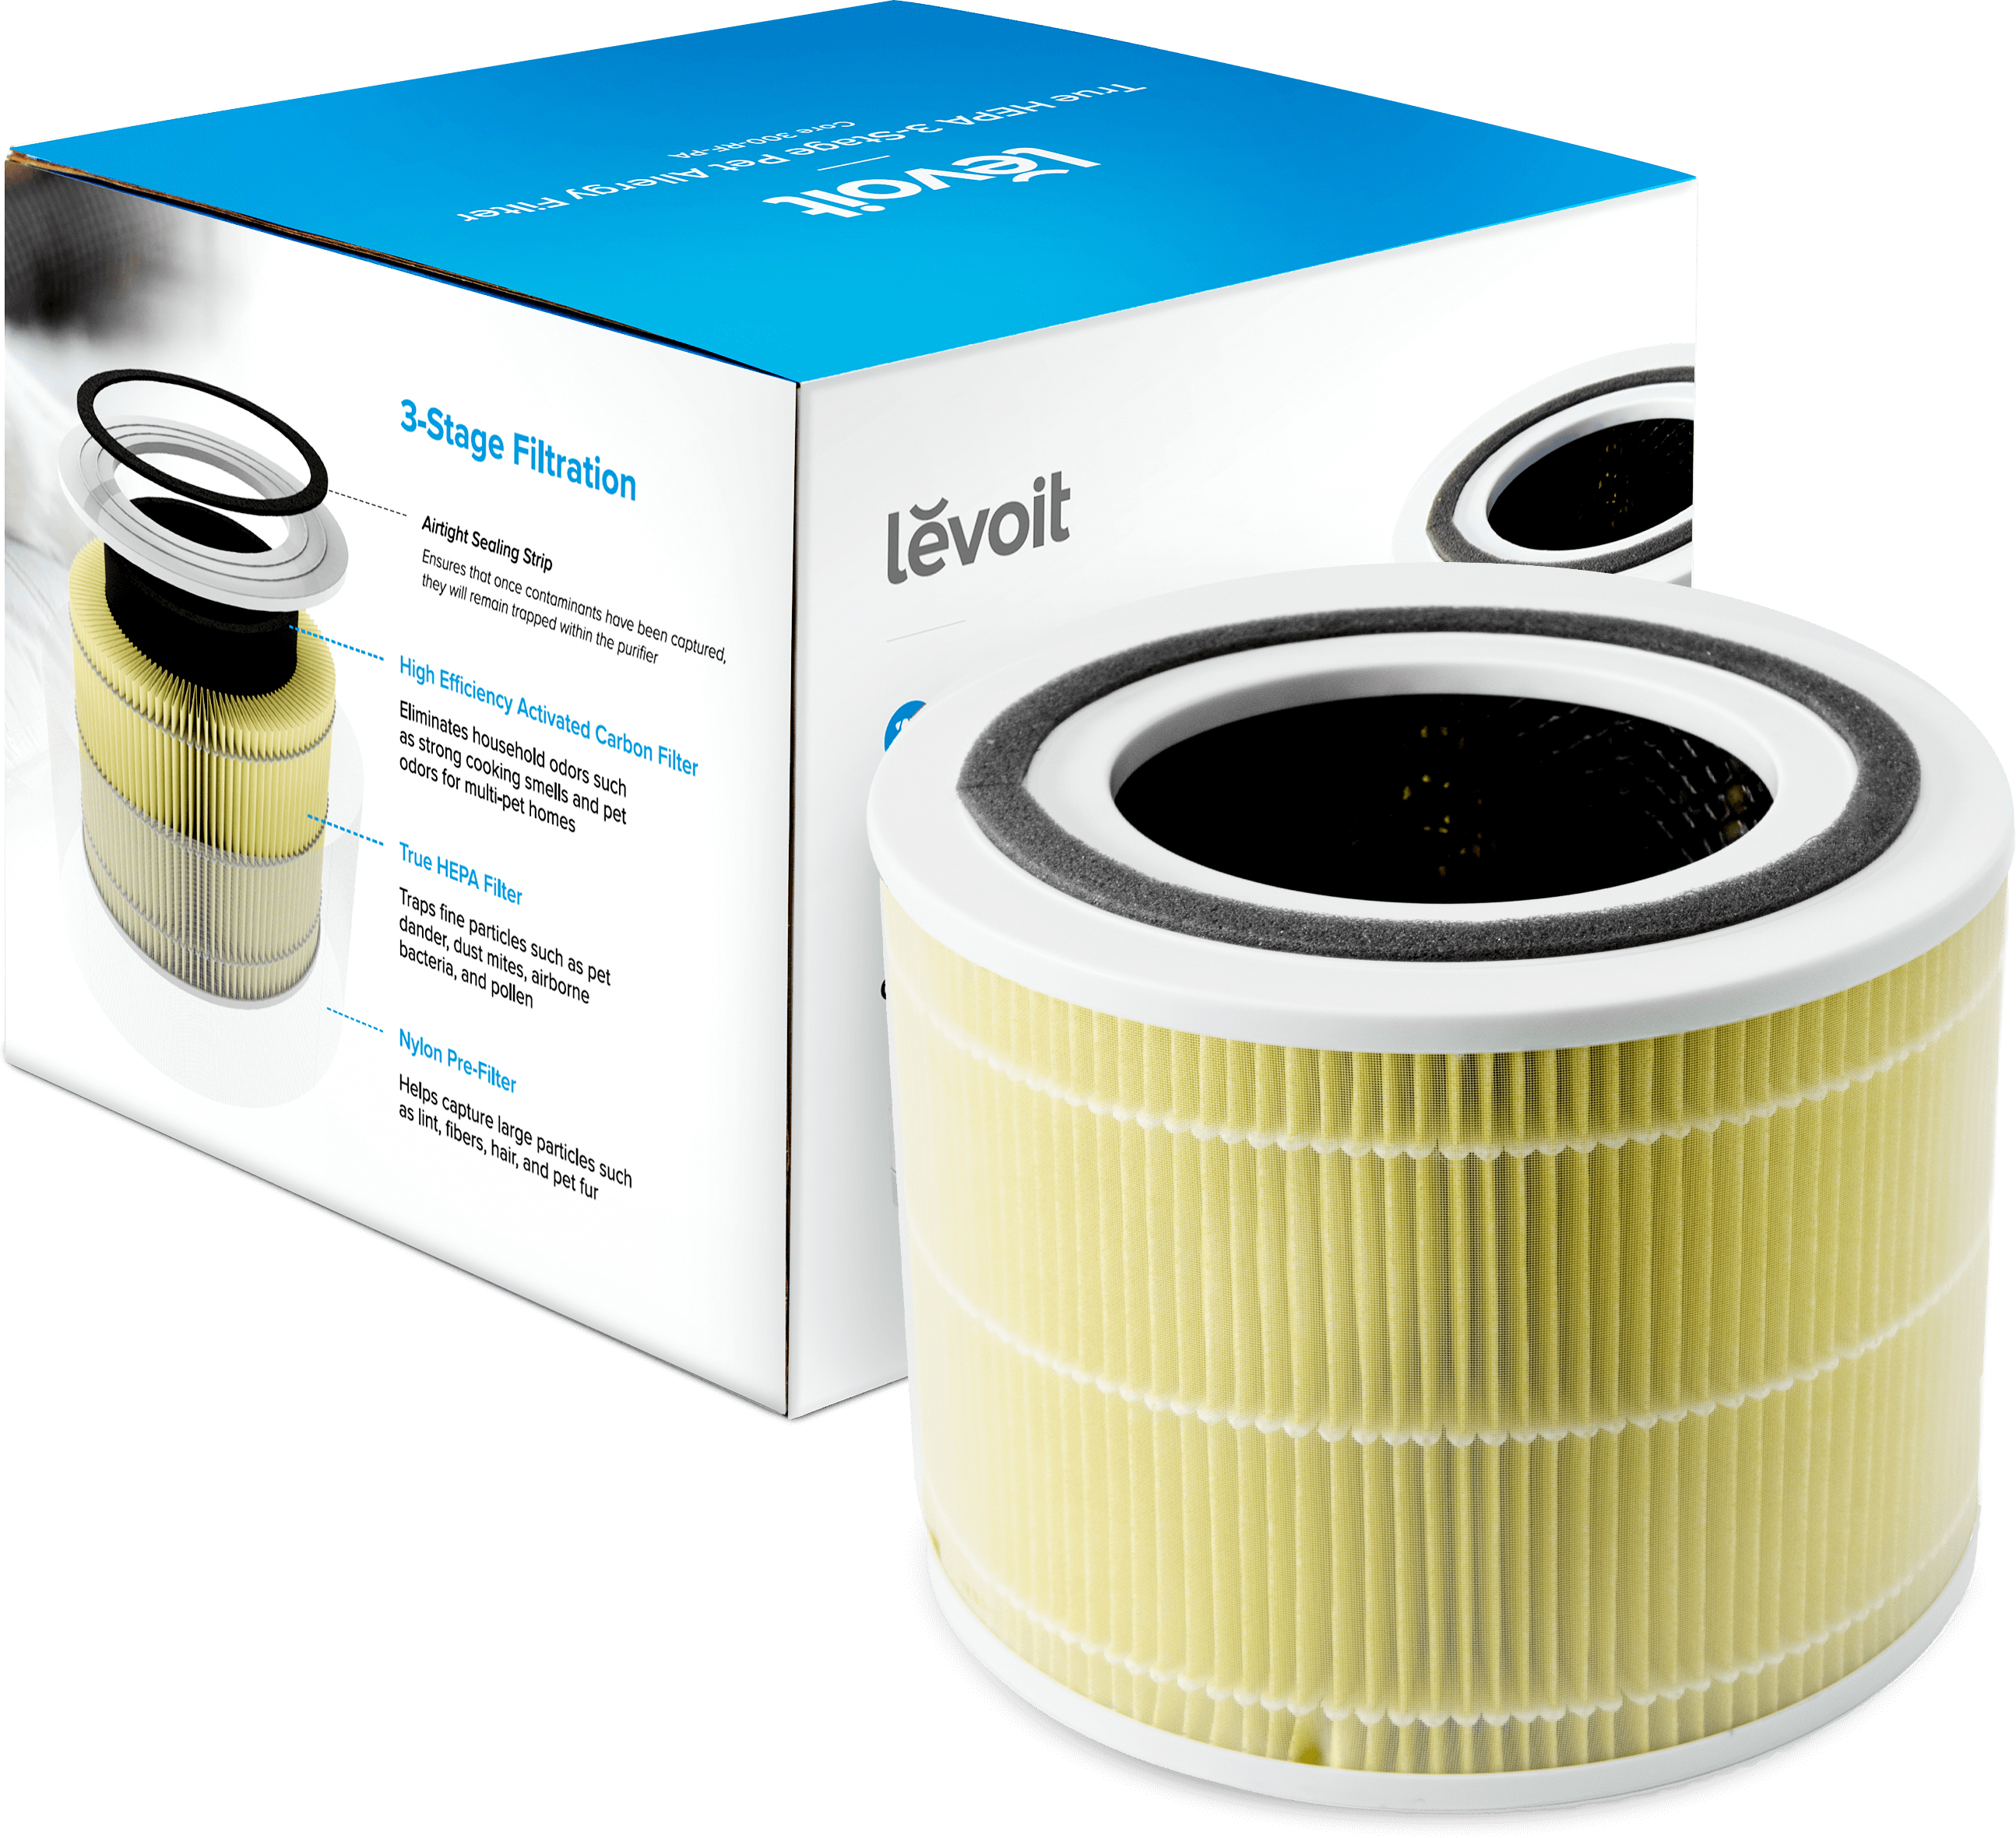 Levoit Air Cleaner Filter Core 300 True HEPA 3-Stage (Original Pet Allergy Filter)